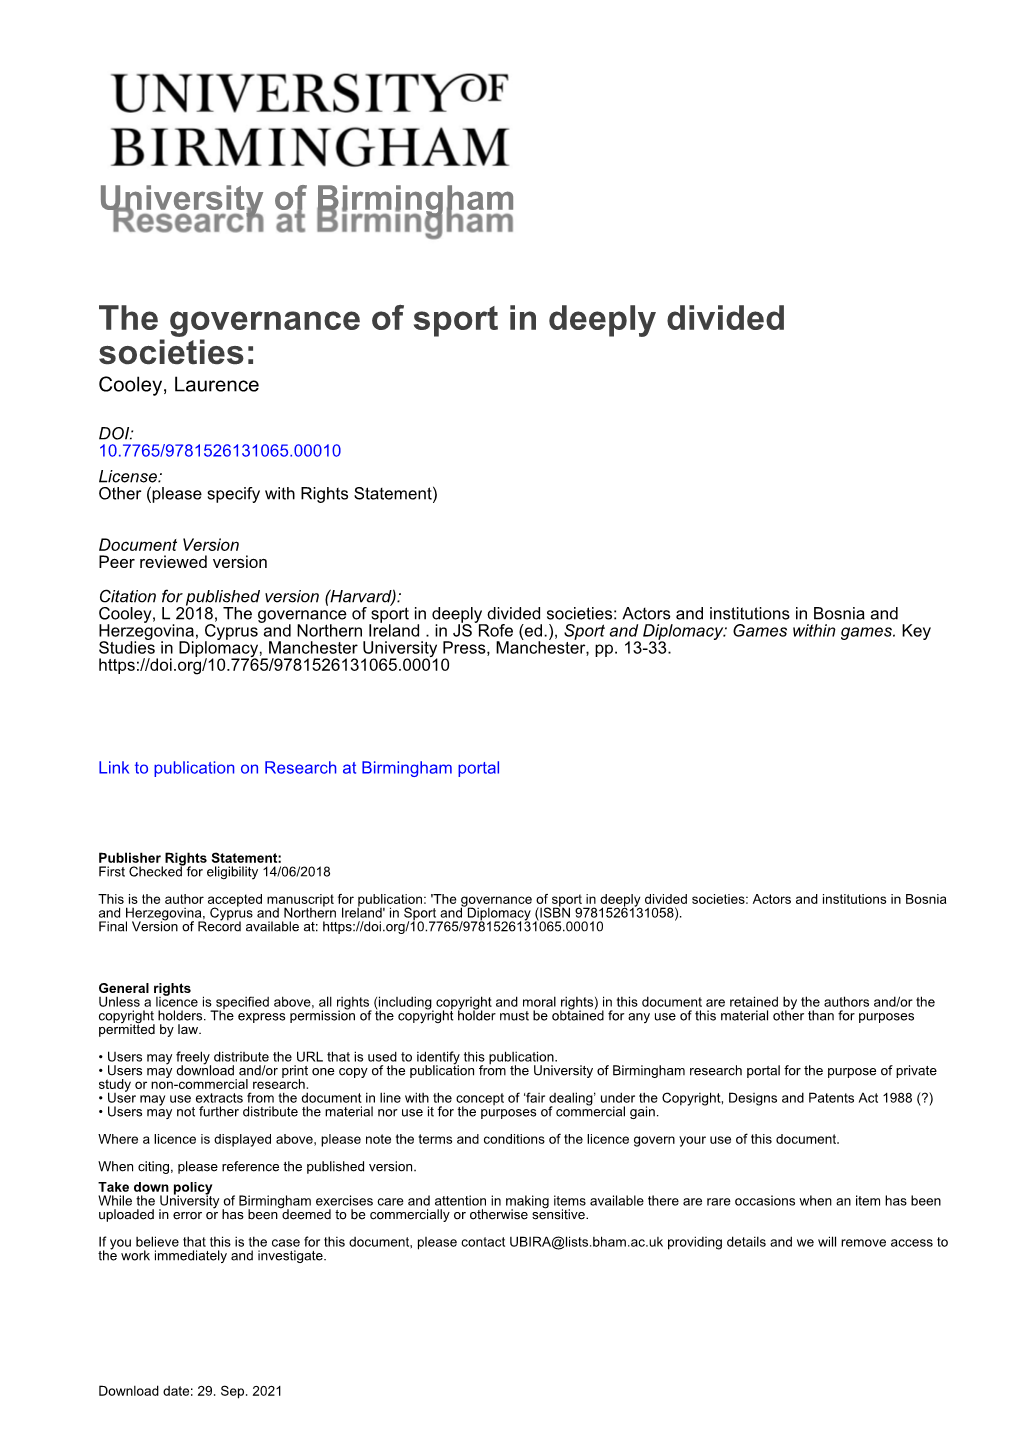 University of Birmingham the Governance of Sport In